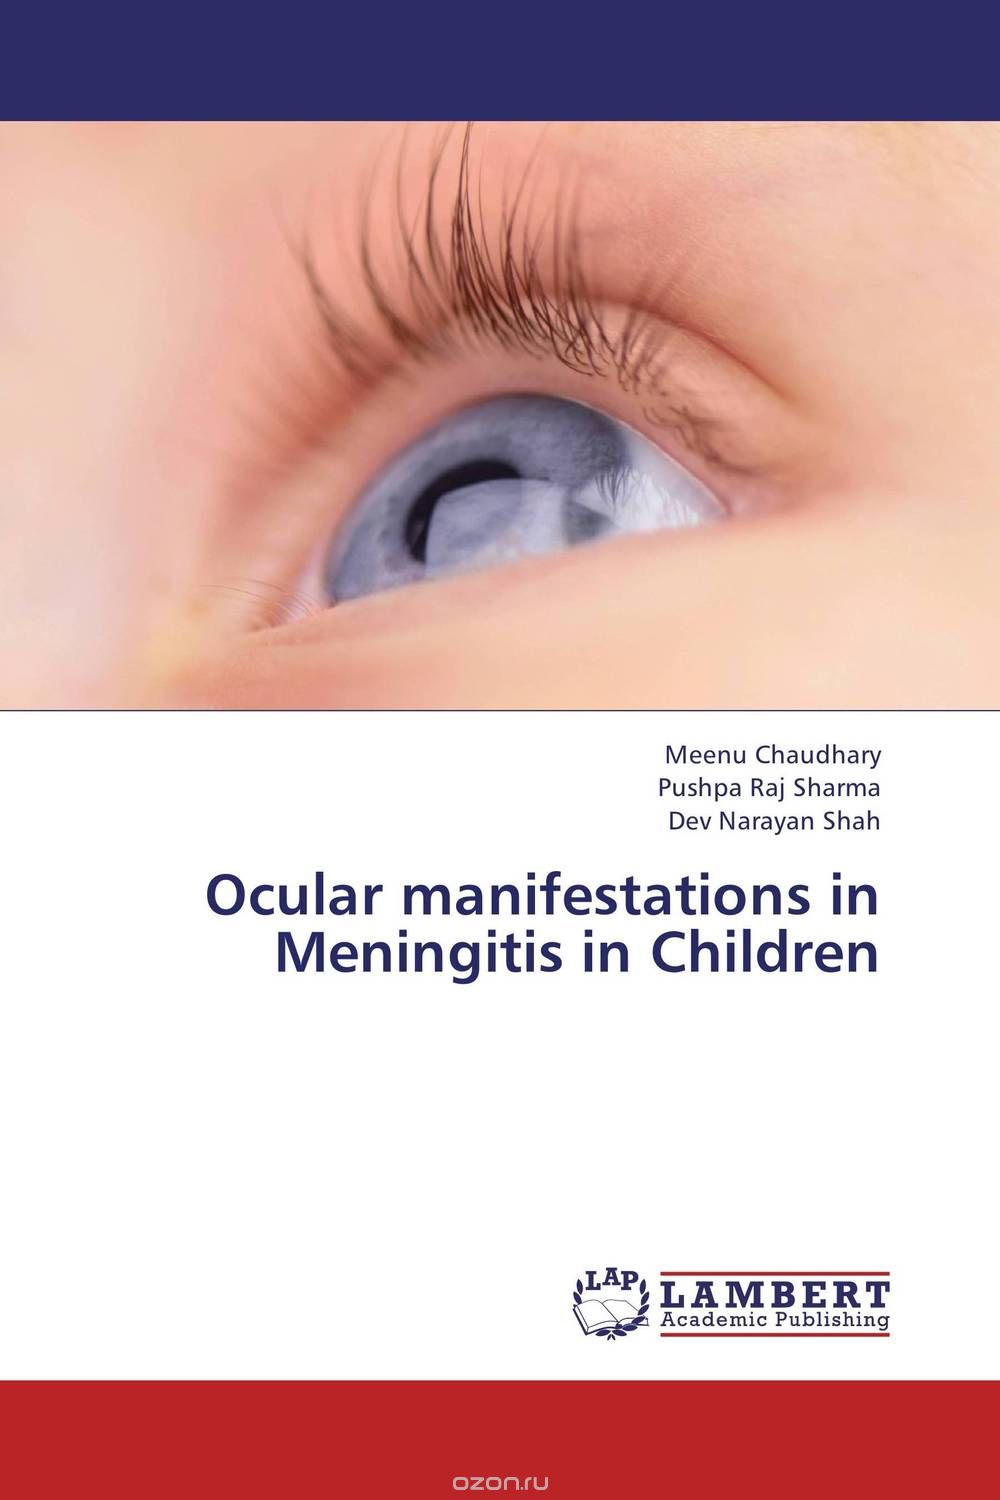 Скачать книгу "Ocular manifestations in Meningitis in Children"